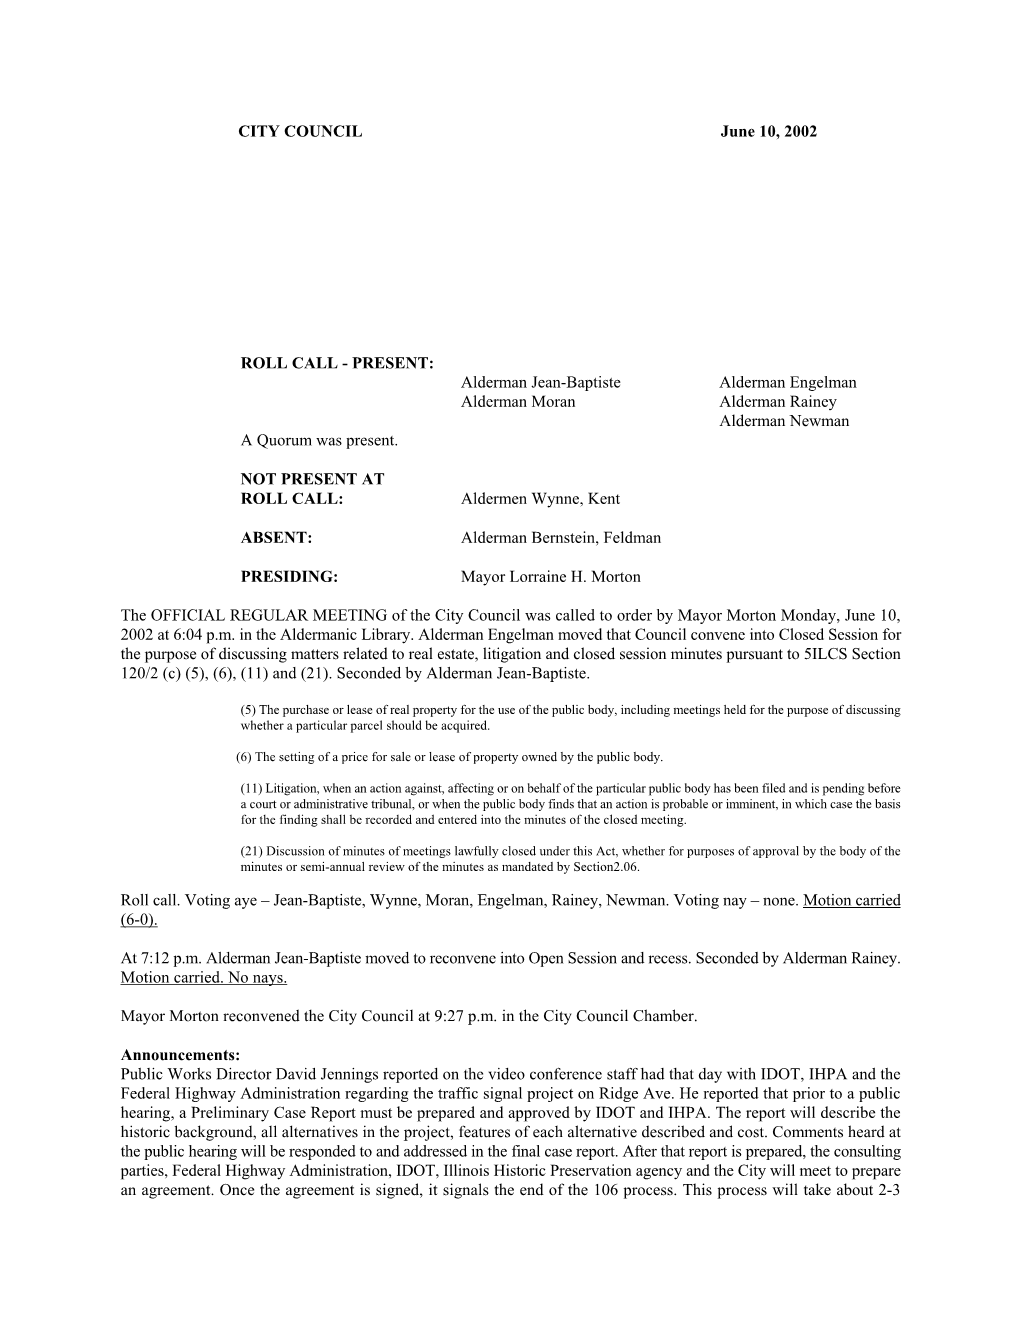 City Council Minutes June 10, 2002